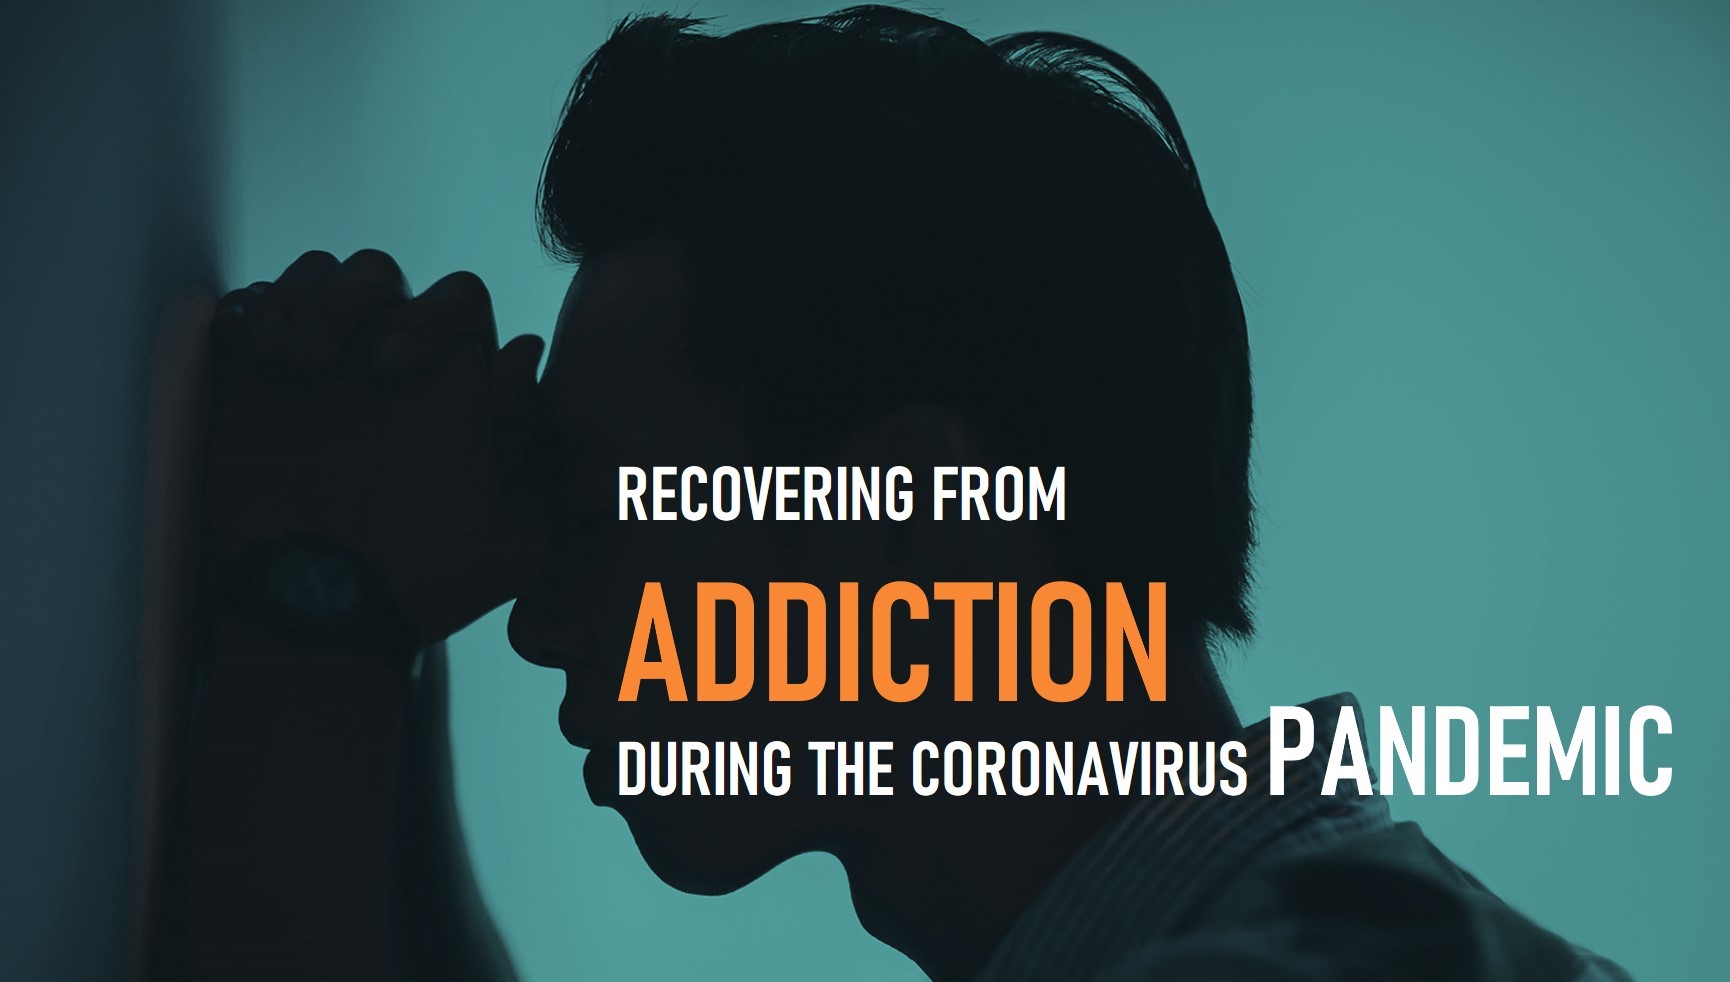 Addiction during COVID-19